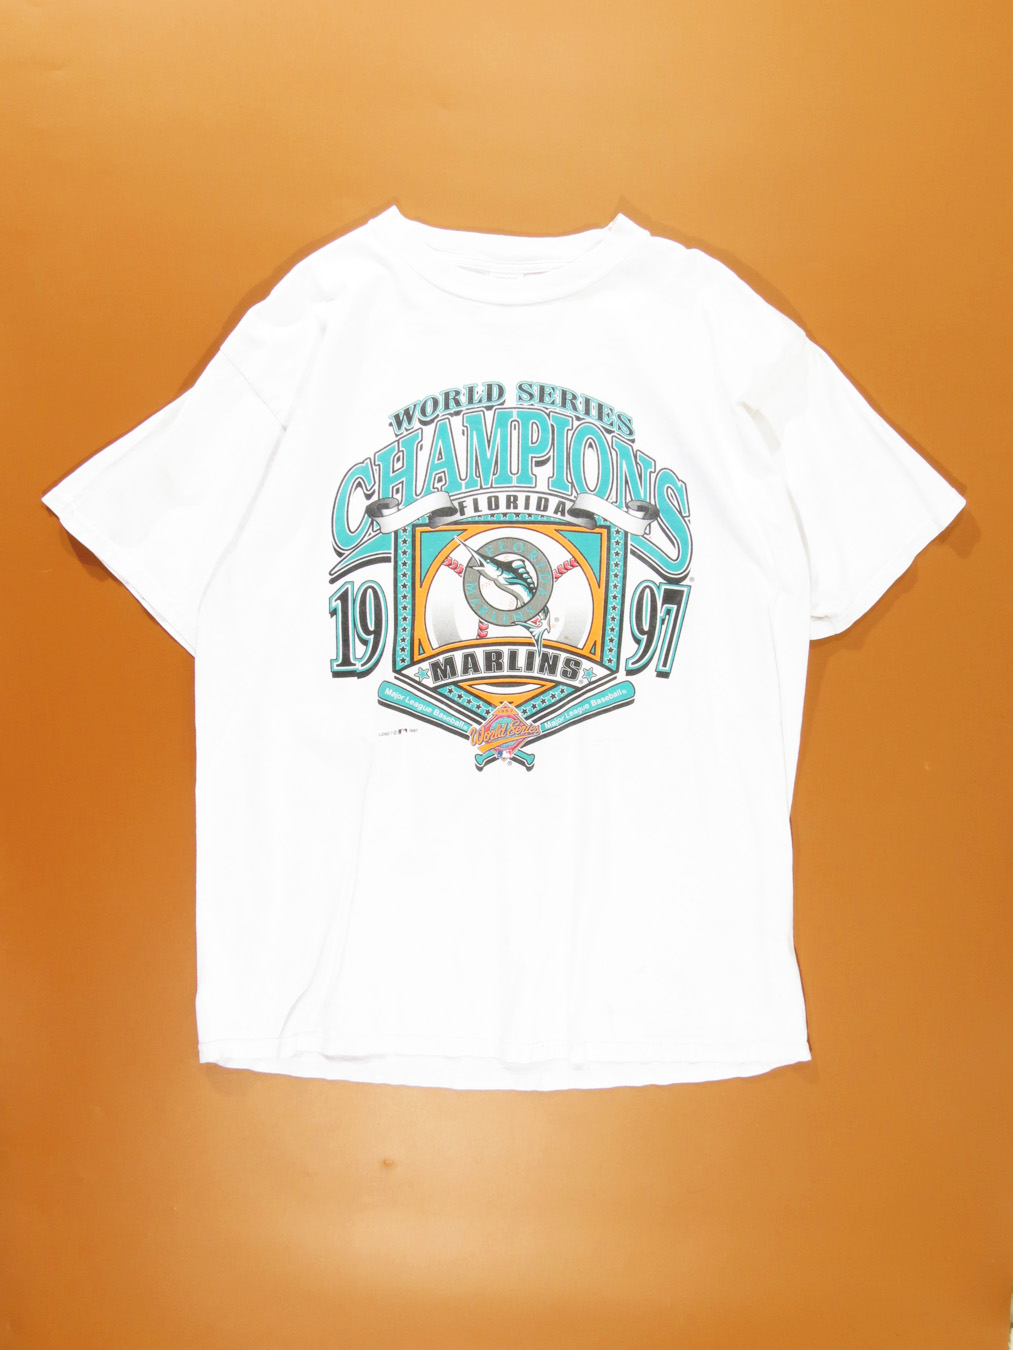 1997 MLB Marlins World Series Championship Team Shirt